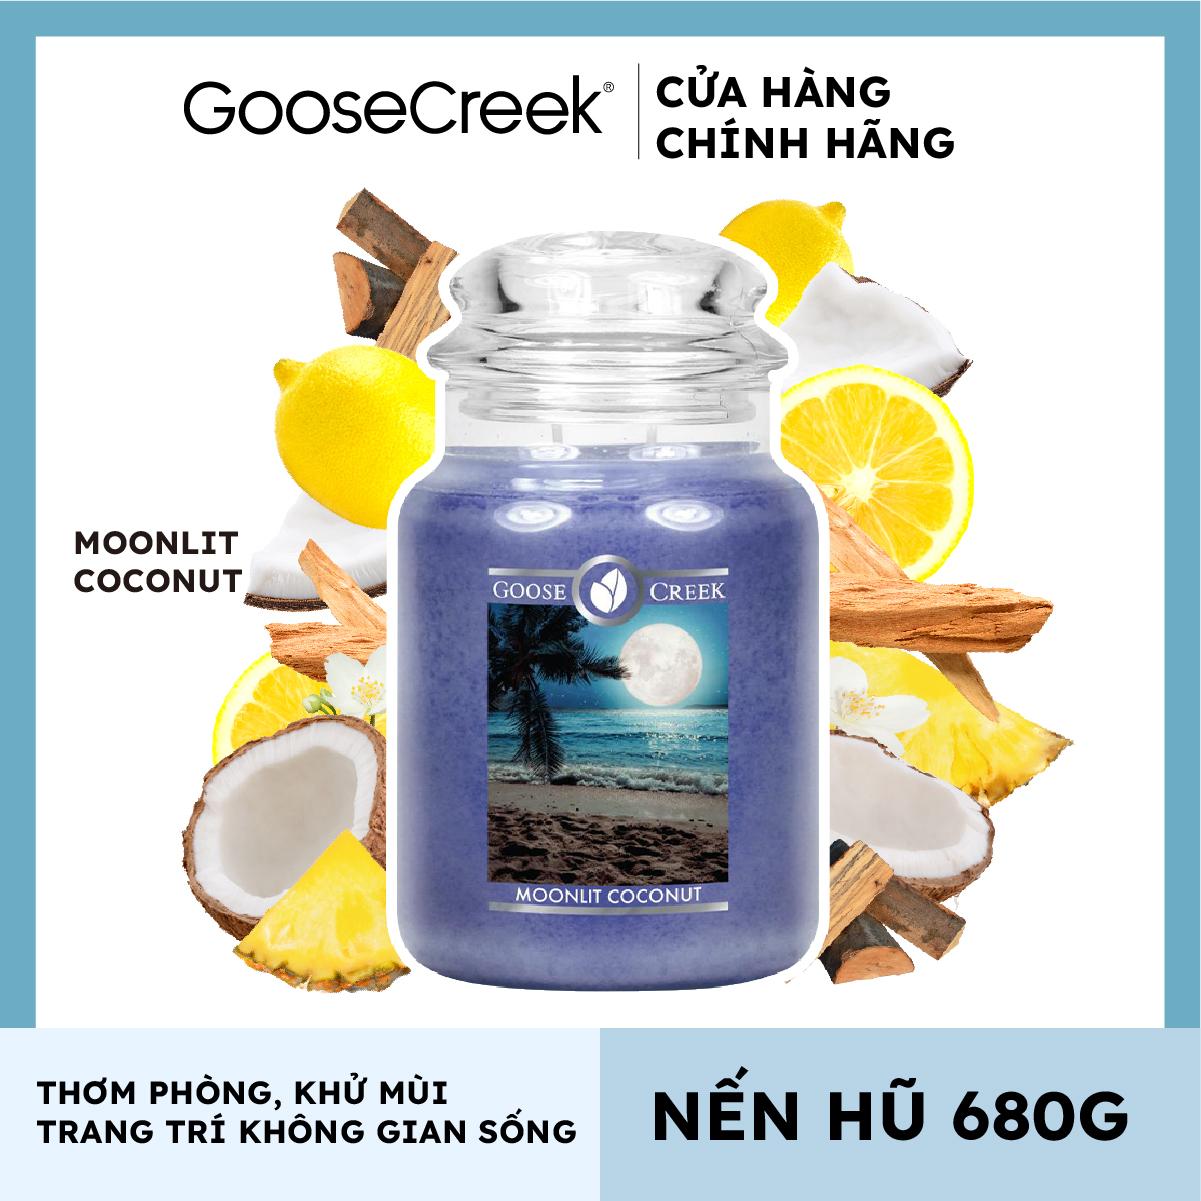 Nến hũ Goose Creek (680g) - Moonlit Coconut